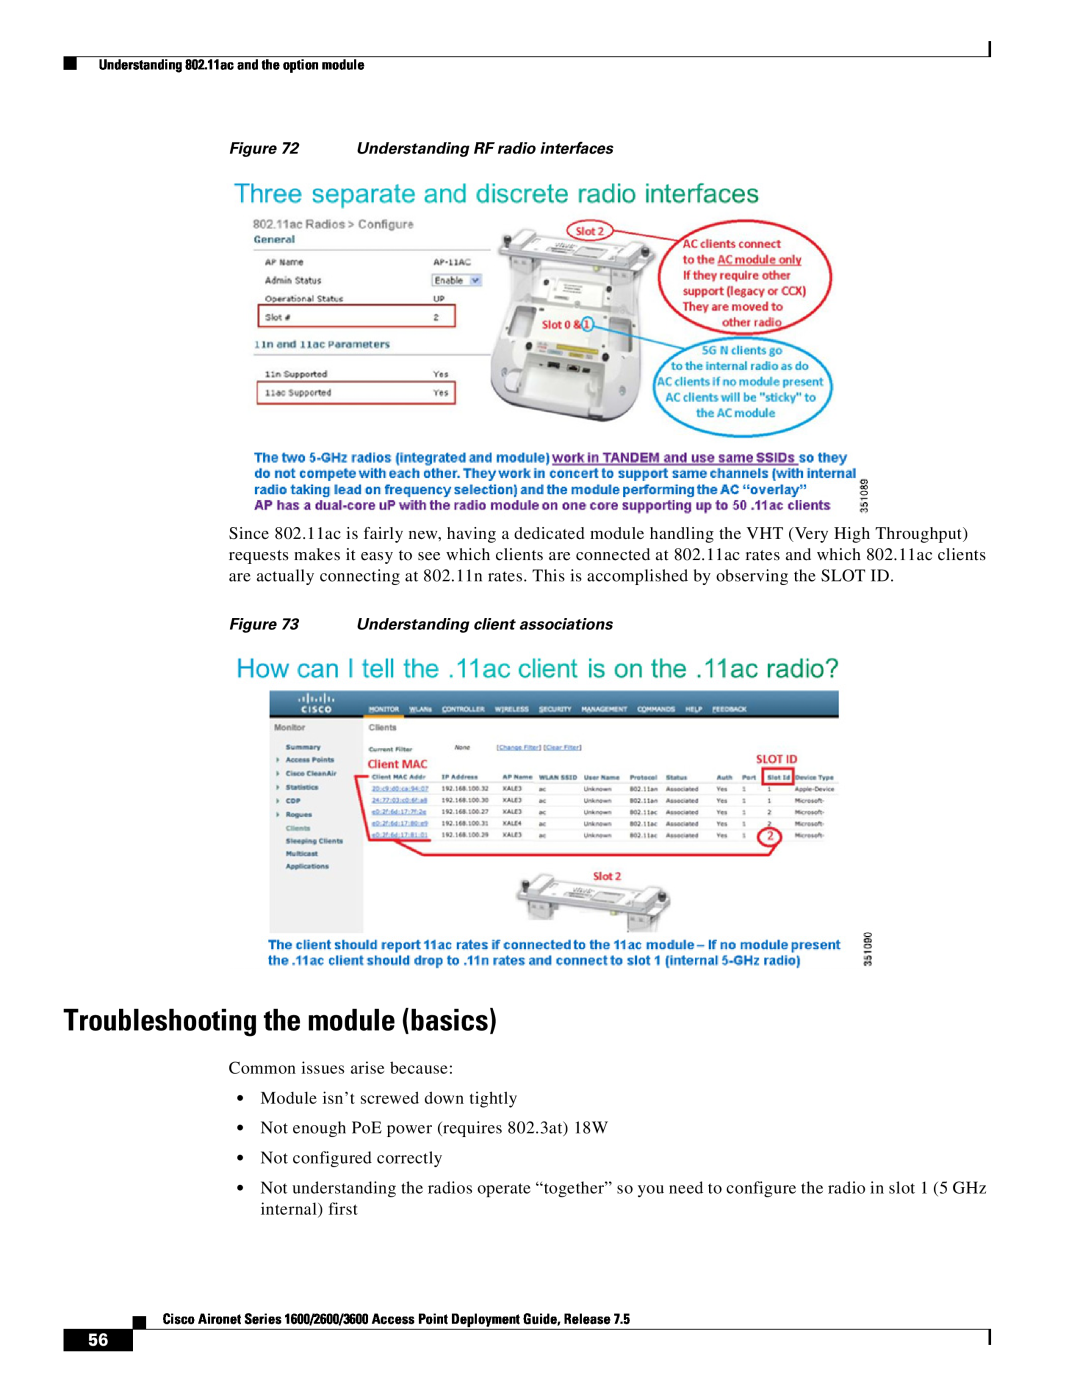 Cisco Systems AIRRM3000ACAK9 manual Troubleshooting the module basics 